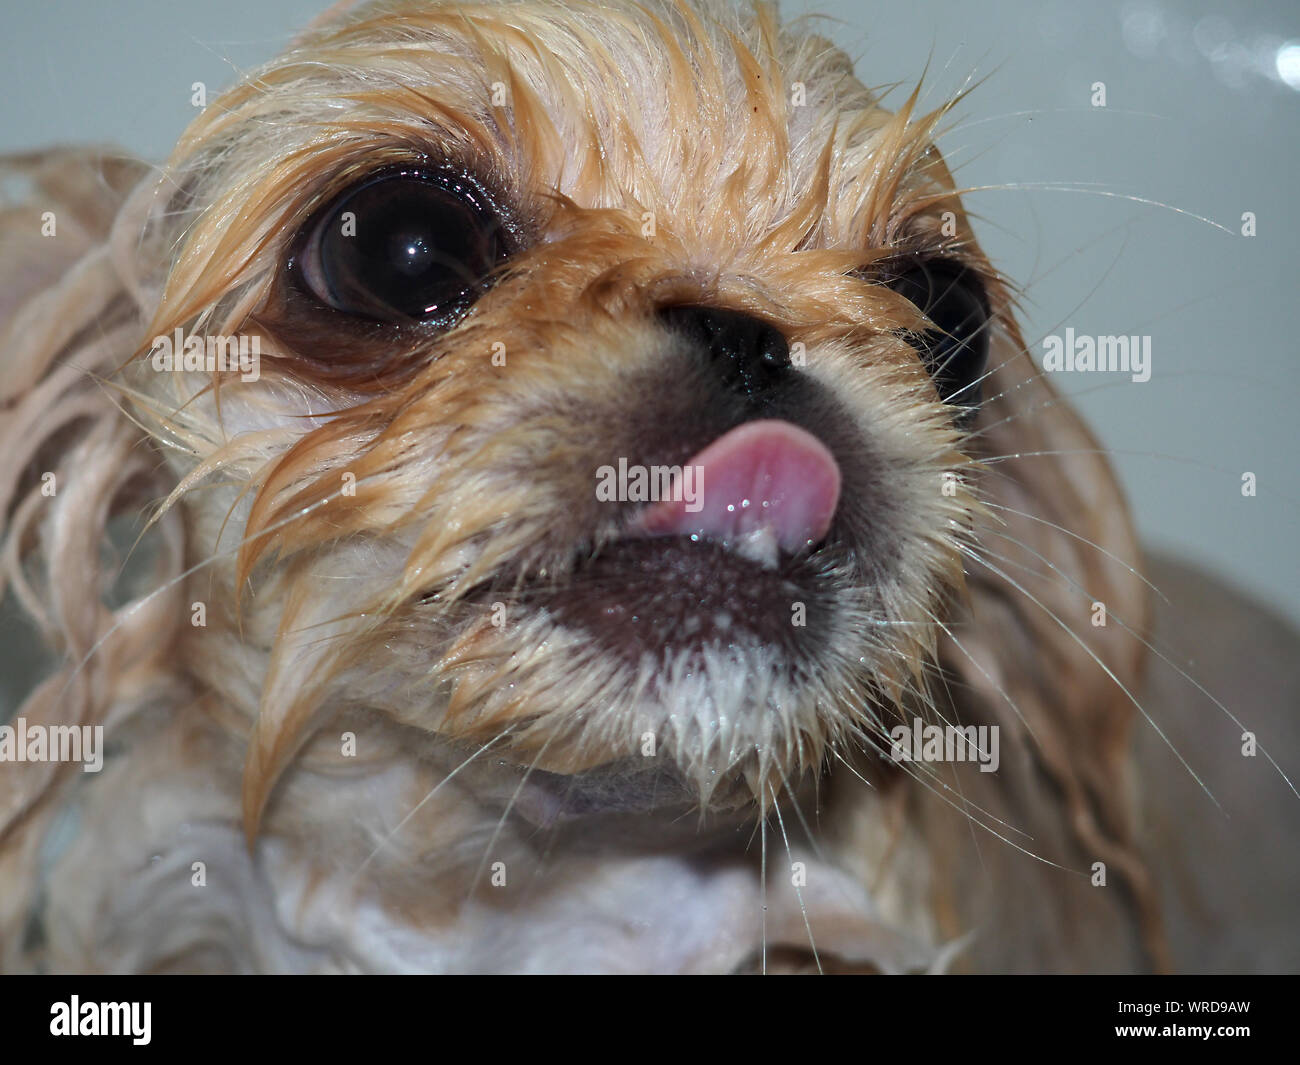 Funny puppy dog prendre un bain Banque D'Images